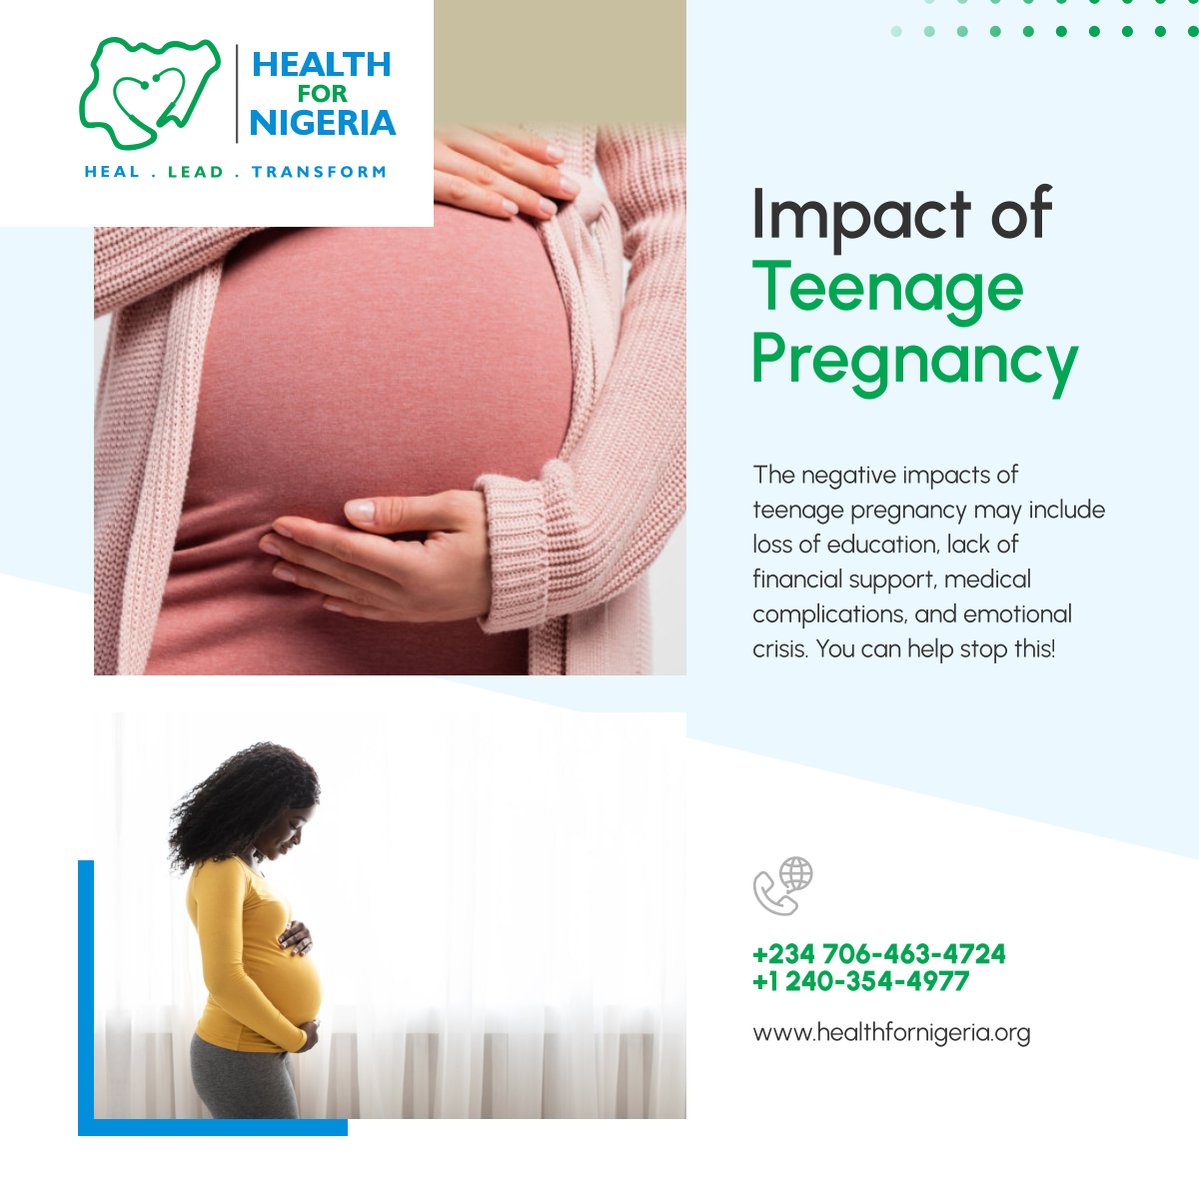 Read more about how we can help discourage teenage pregnancy, especially in rural areas here: tinyurl.com/ye7de6ua

#CharityOrganization #HealthForNigeria #TeenagePregnancy